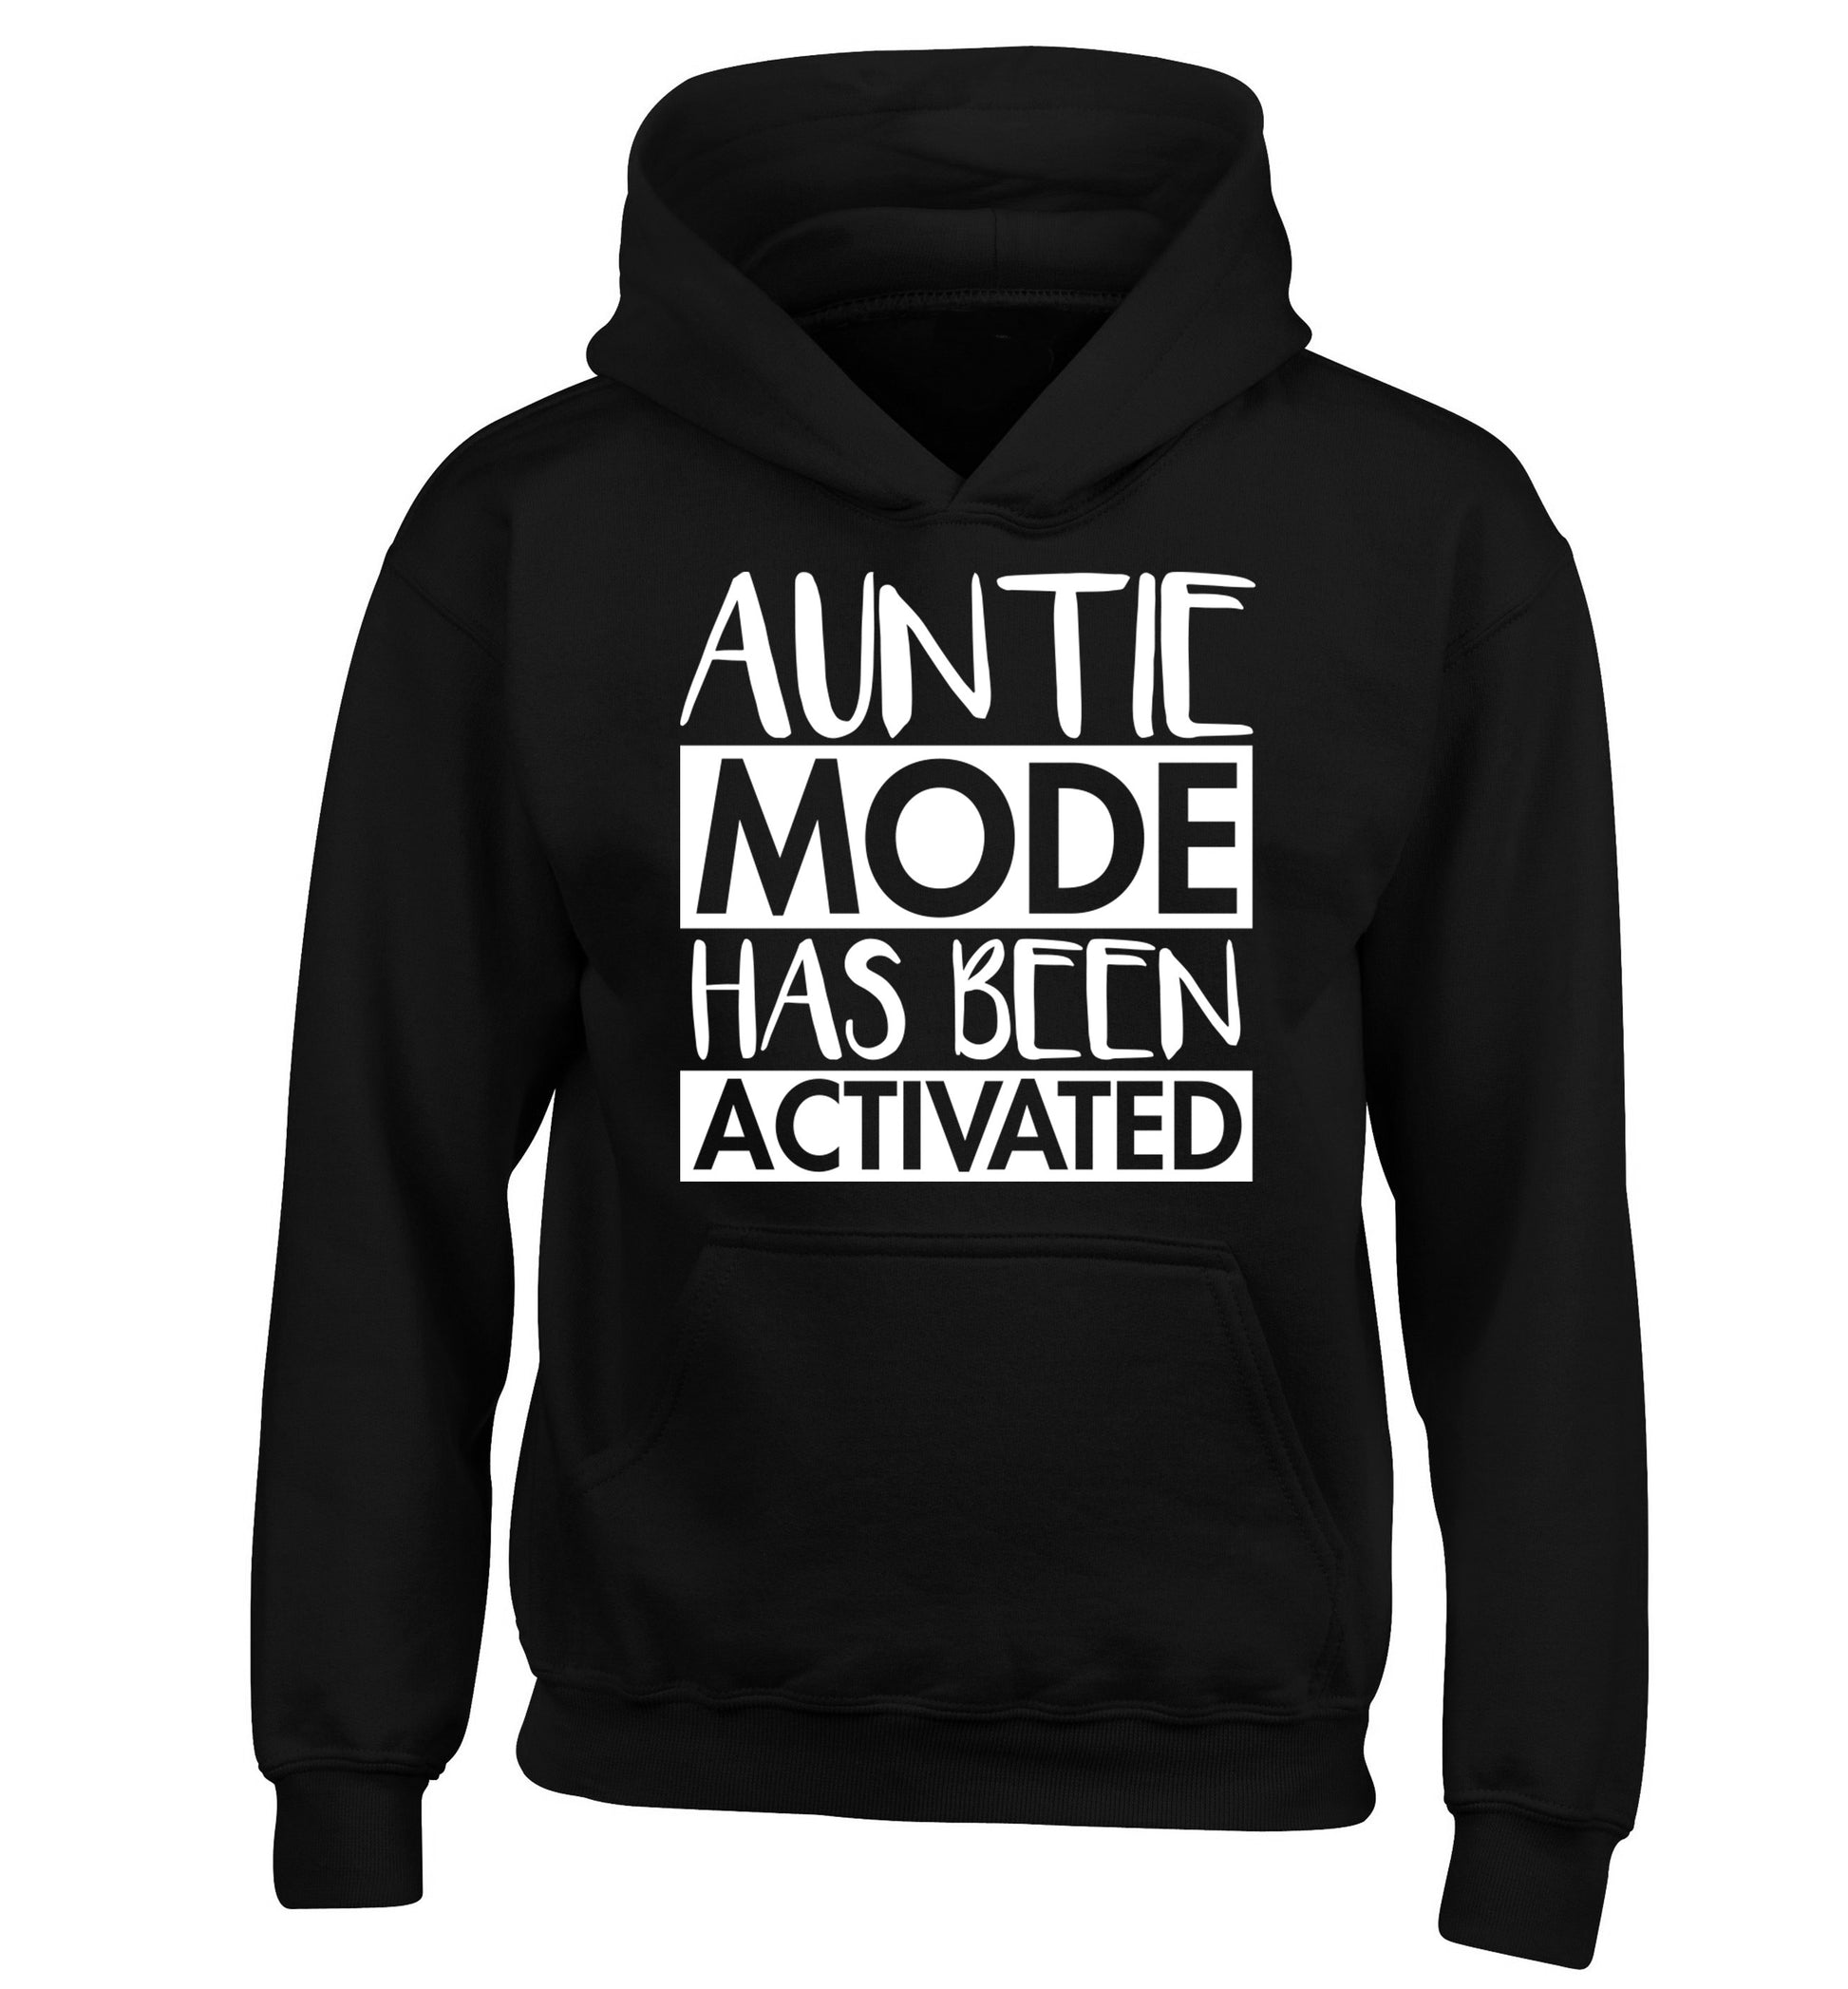 Auntie mode activated children's black hoodie 12-14 Years